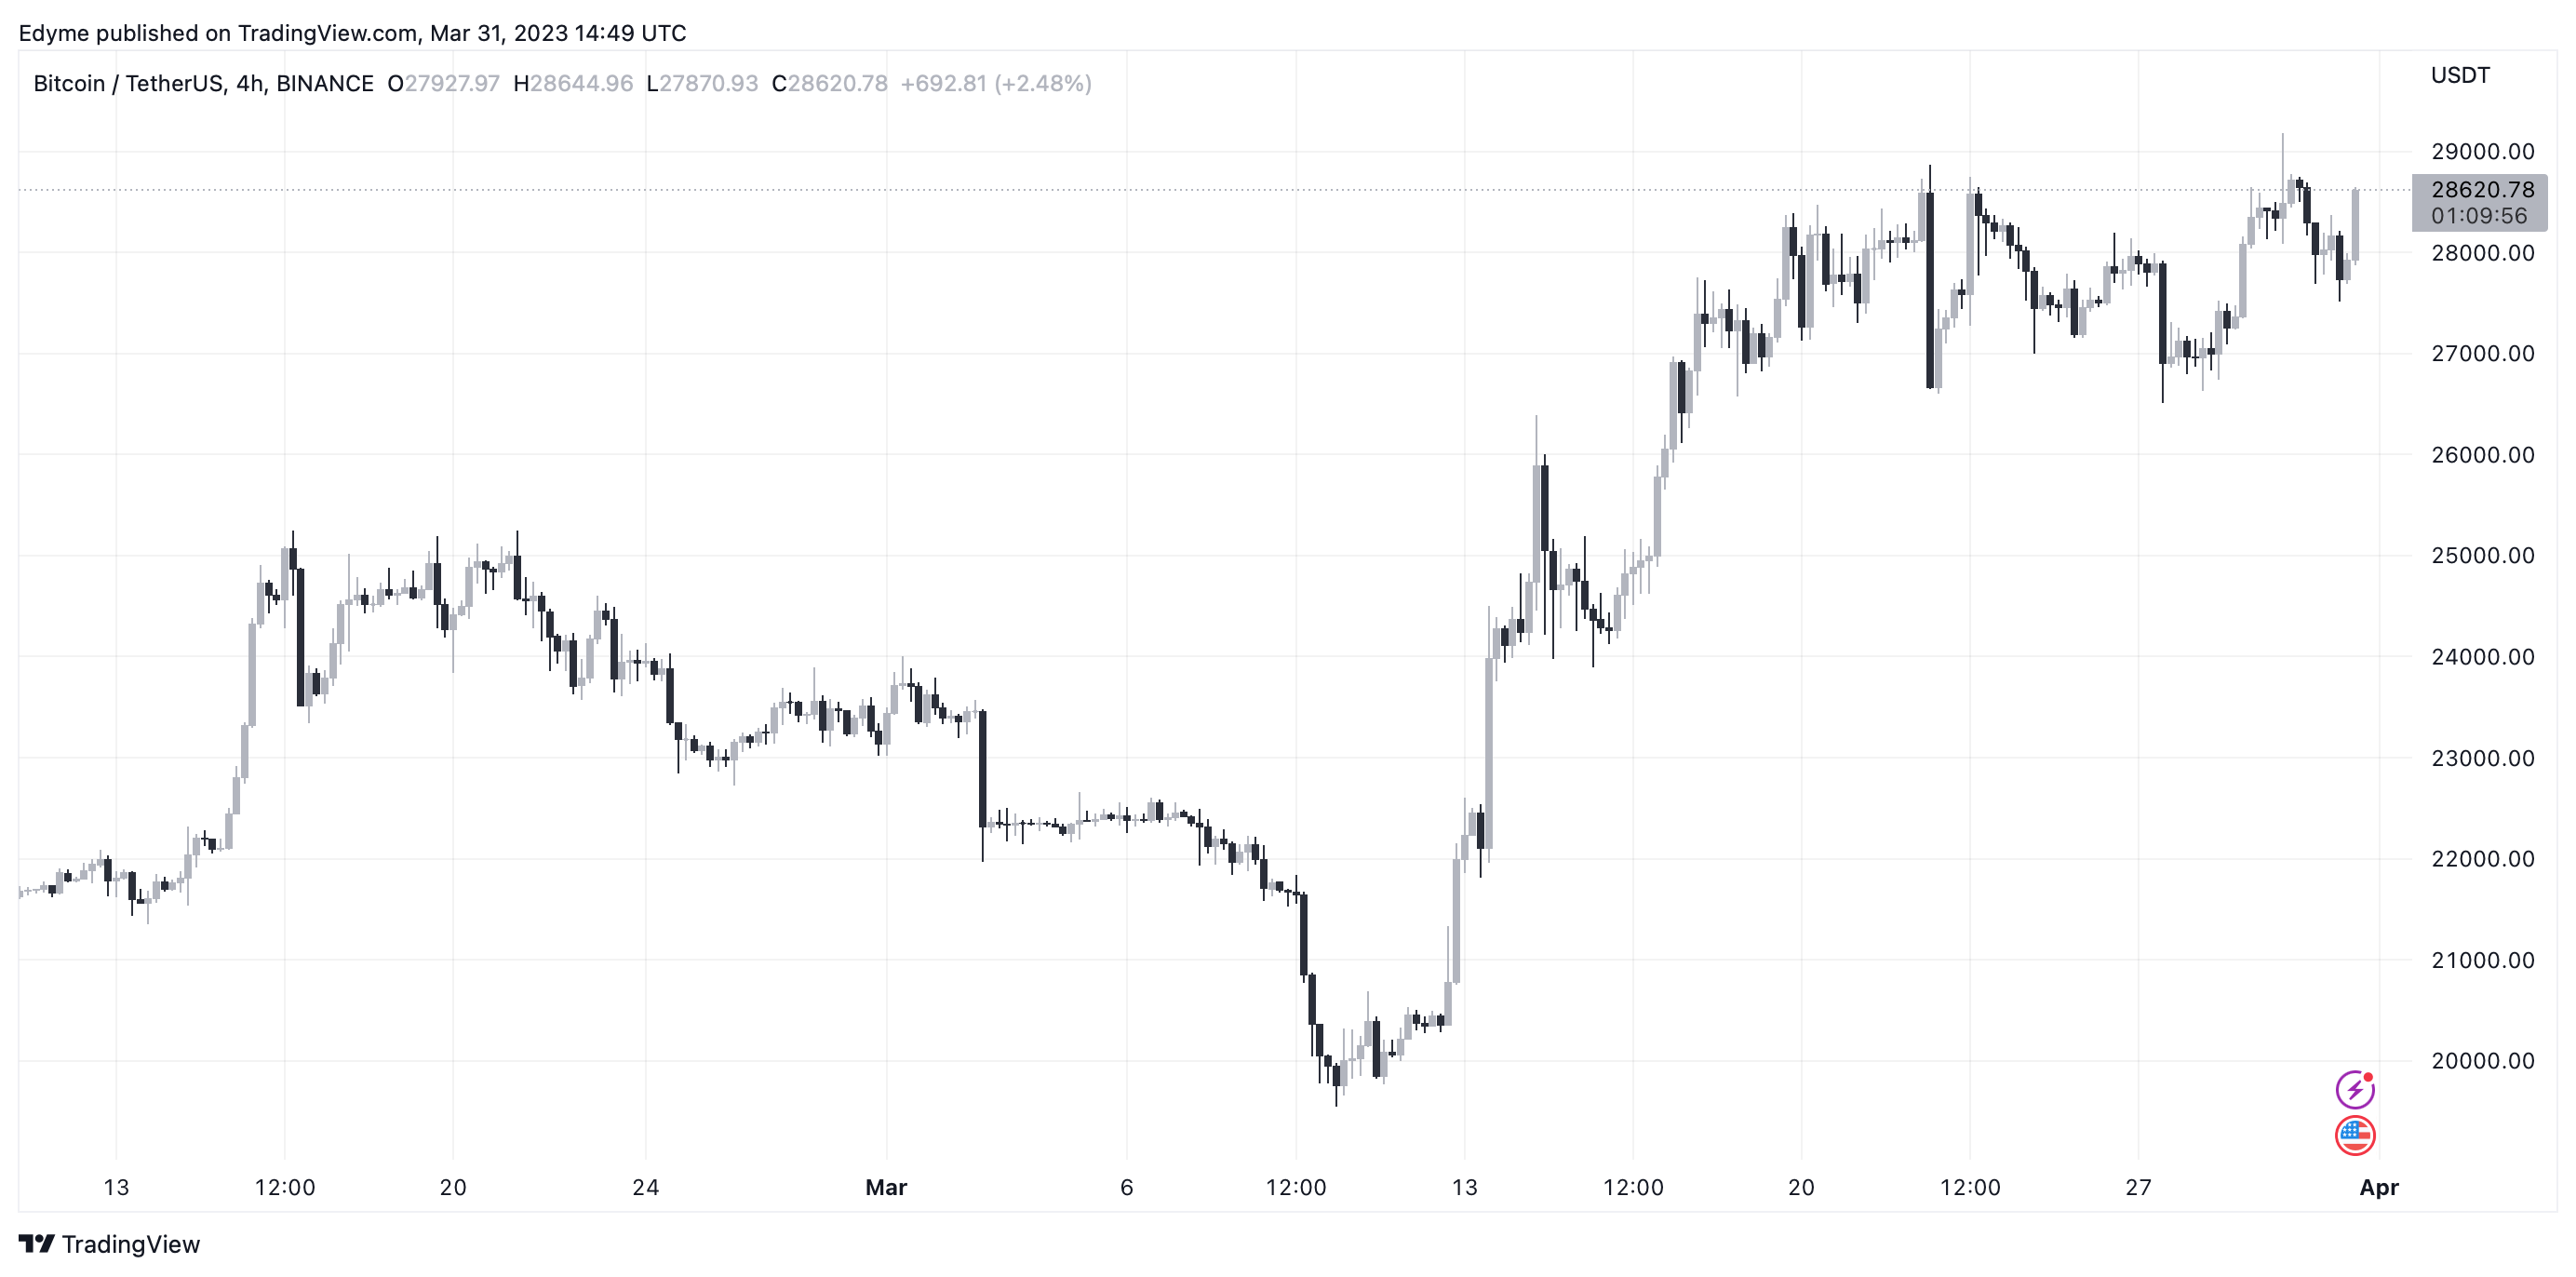 Bitcoin price chart on TradingView